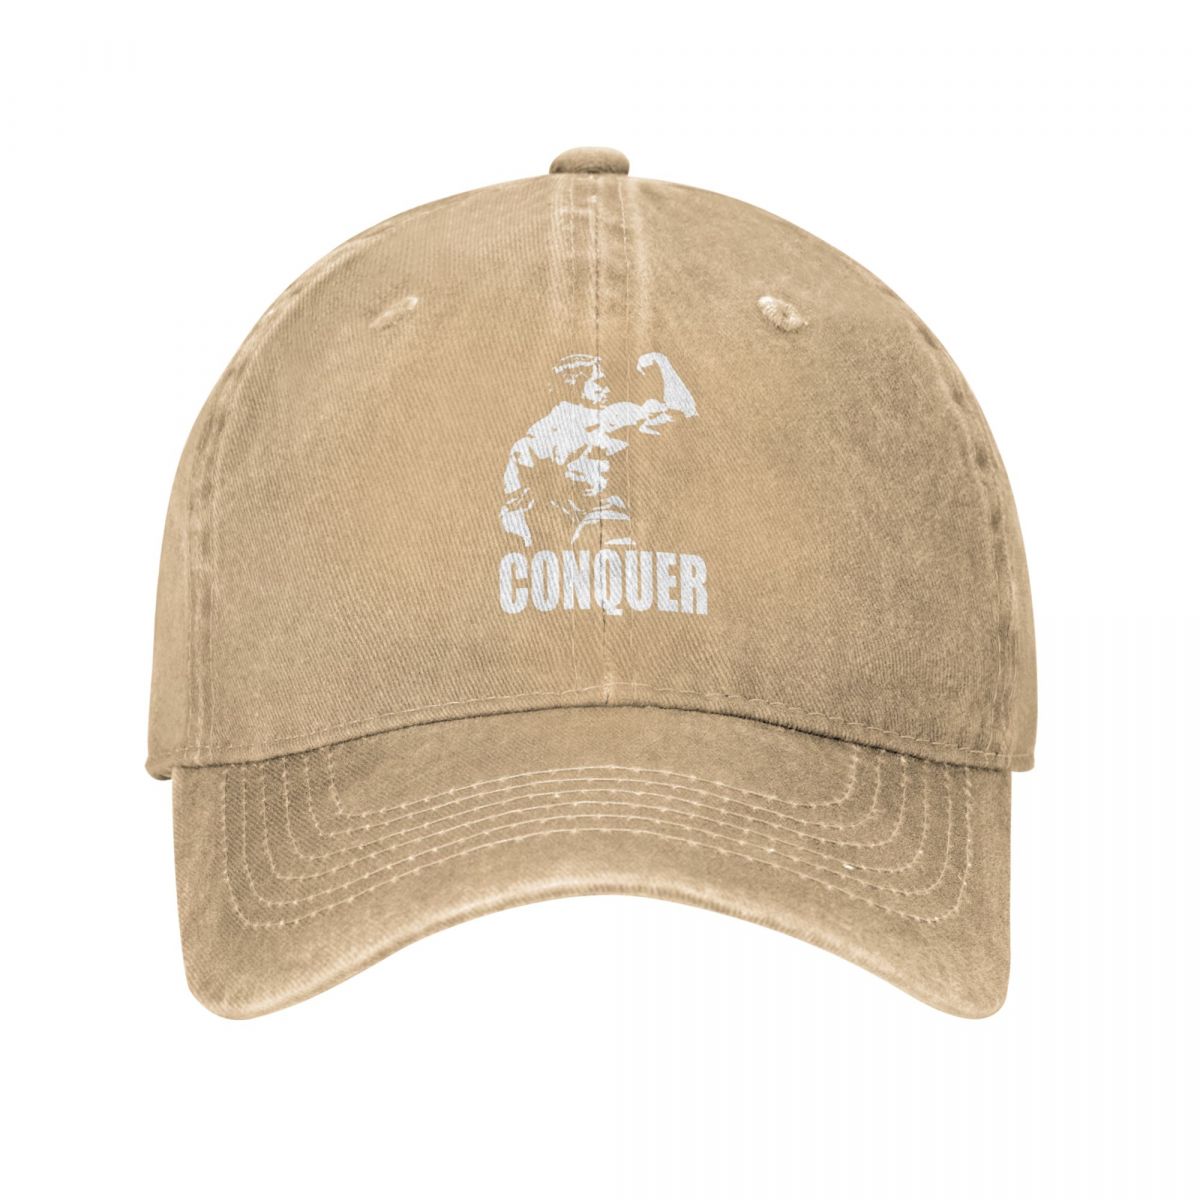 Conquer Arnold Schwarzenegger - Snapback Baseball Cap - Summer Hat For Men and Women-Khaki-One Size-